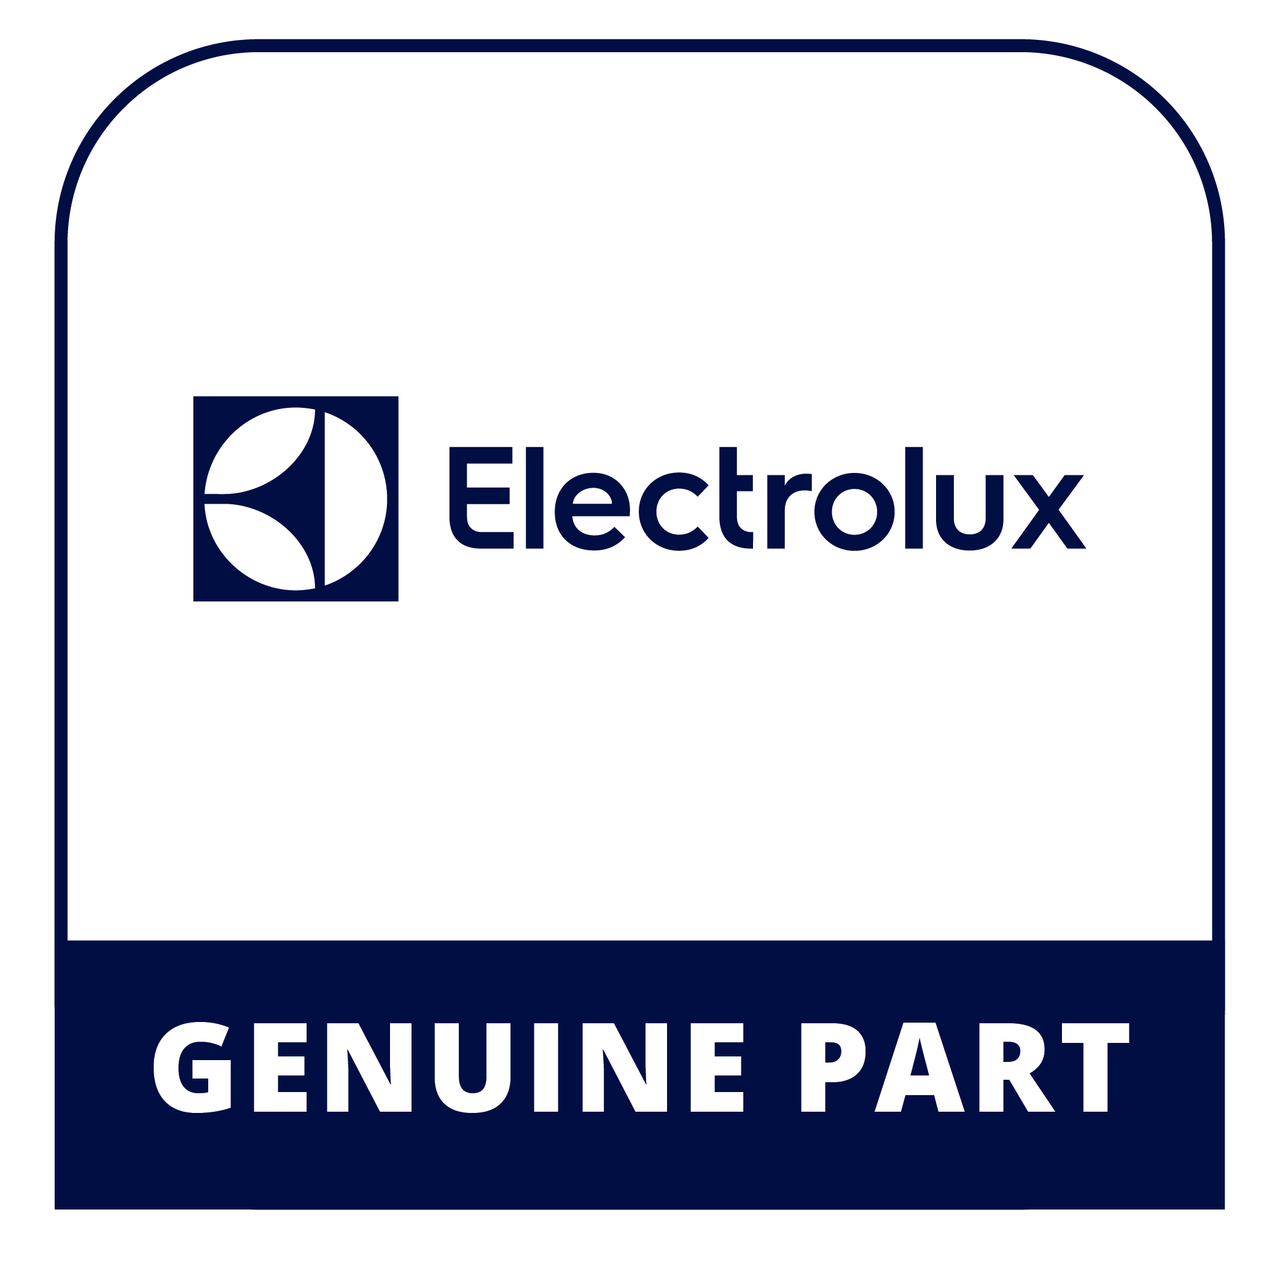 Frigidaire - Electrolux 139028800 Shield - Genuine Electrolux Part